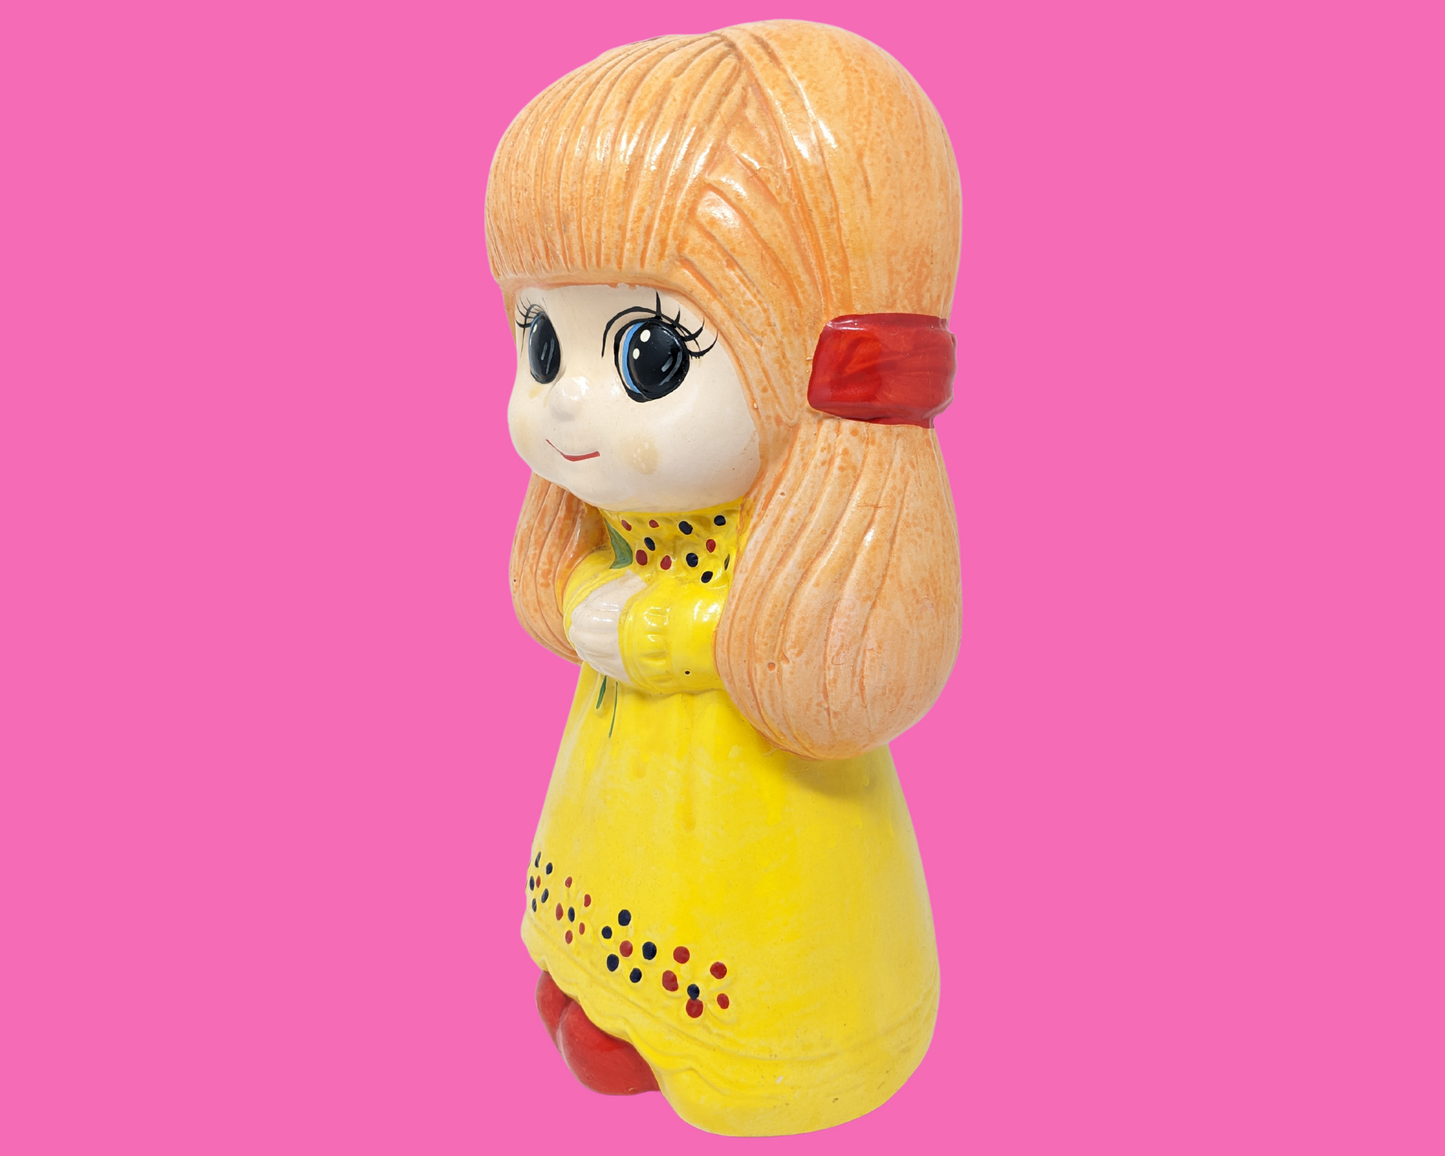 Vintage 1960's Big Eyed Little Girl with Pig Tails Ceramic Piggy Bank, Made in Japan